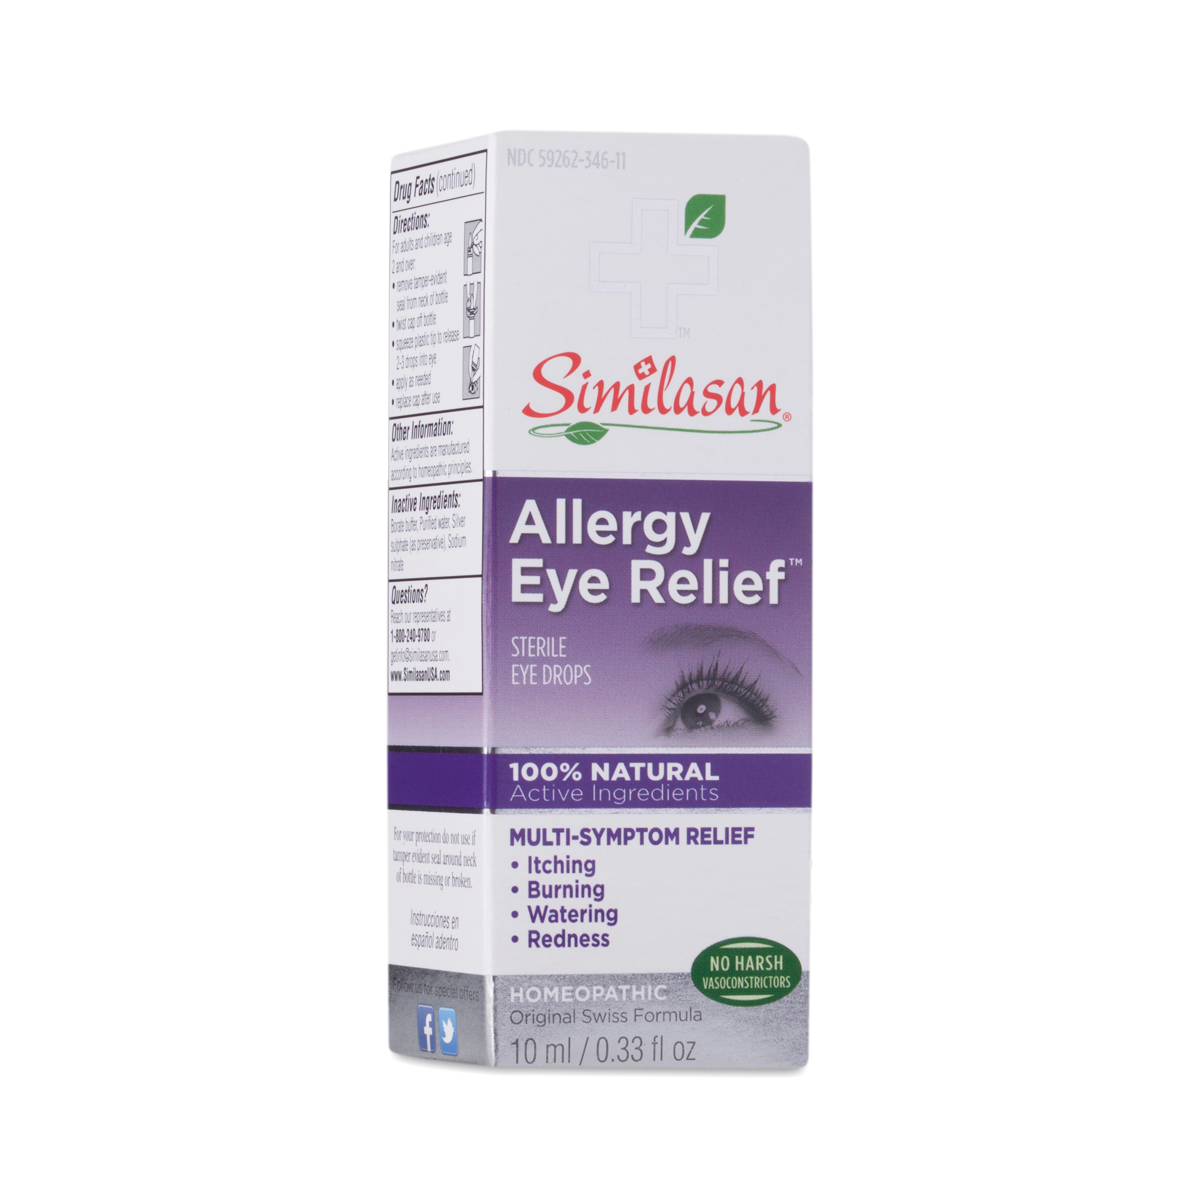 Similasan Corp Eye Drops - Allergy Eye Relief 0.33 oz bottle